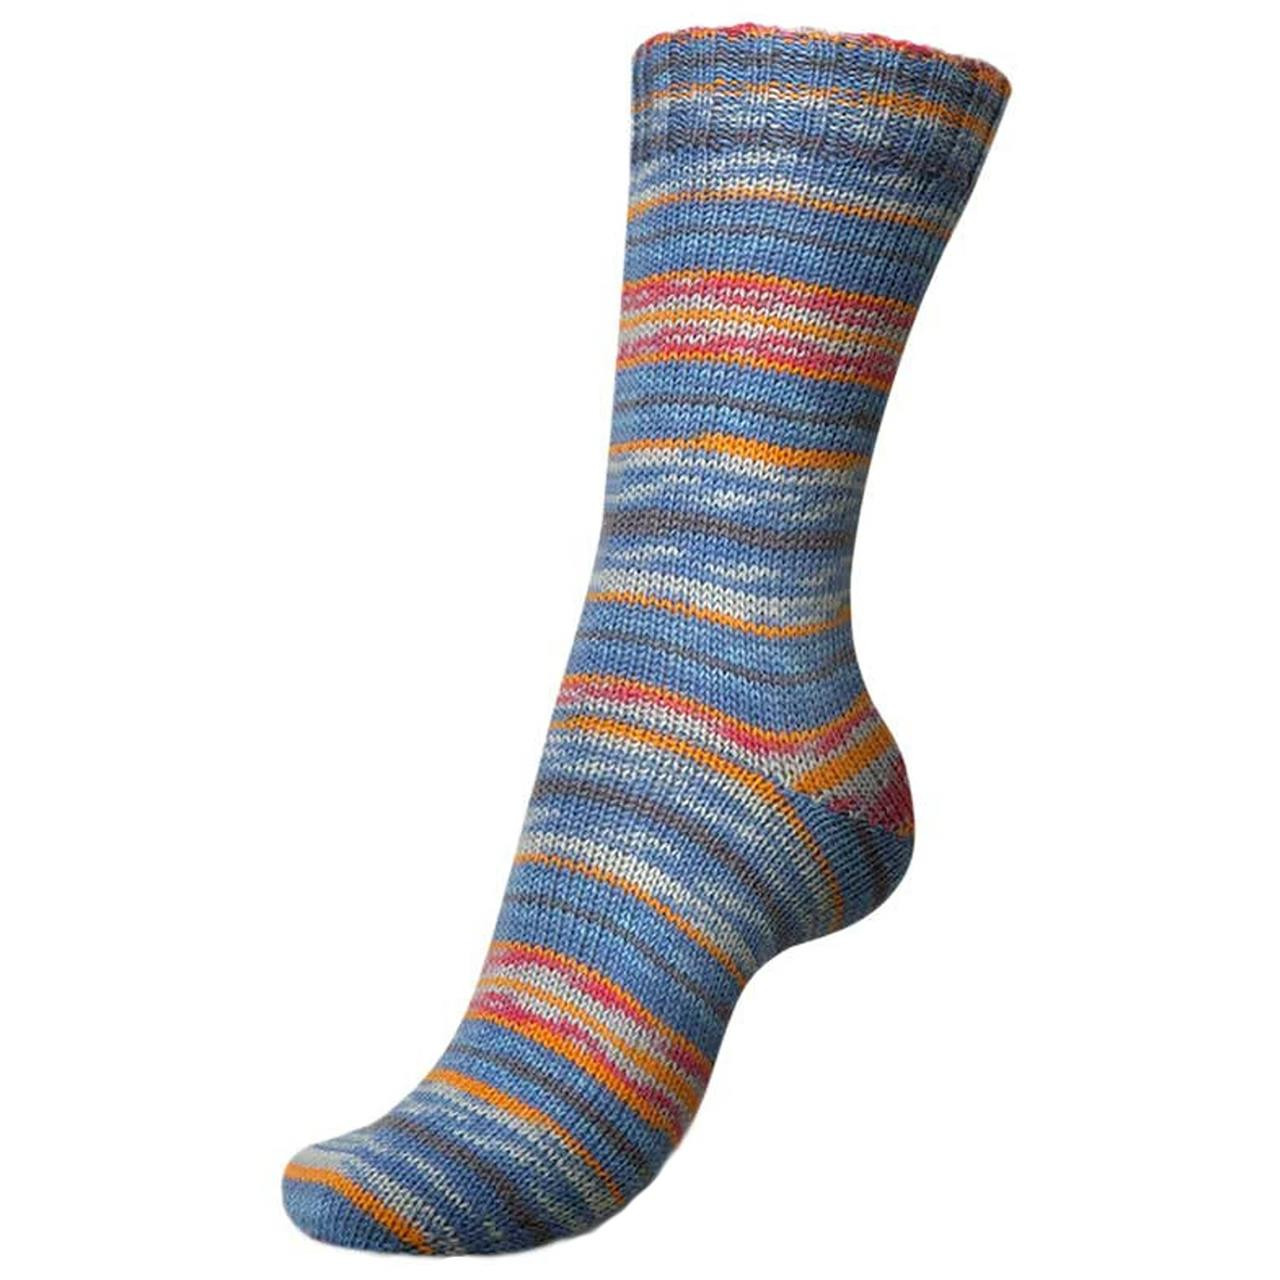 Regia Arne Carlos Setesdal 3820 - Simply Socks Yarn Company